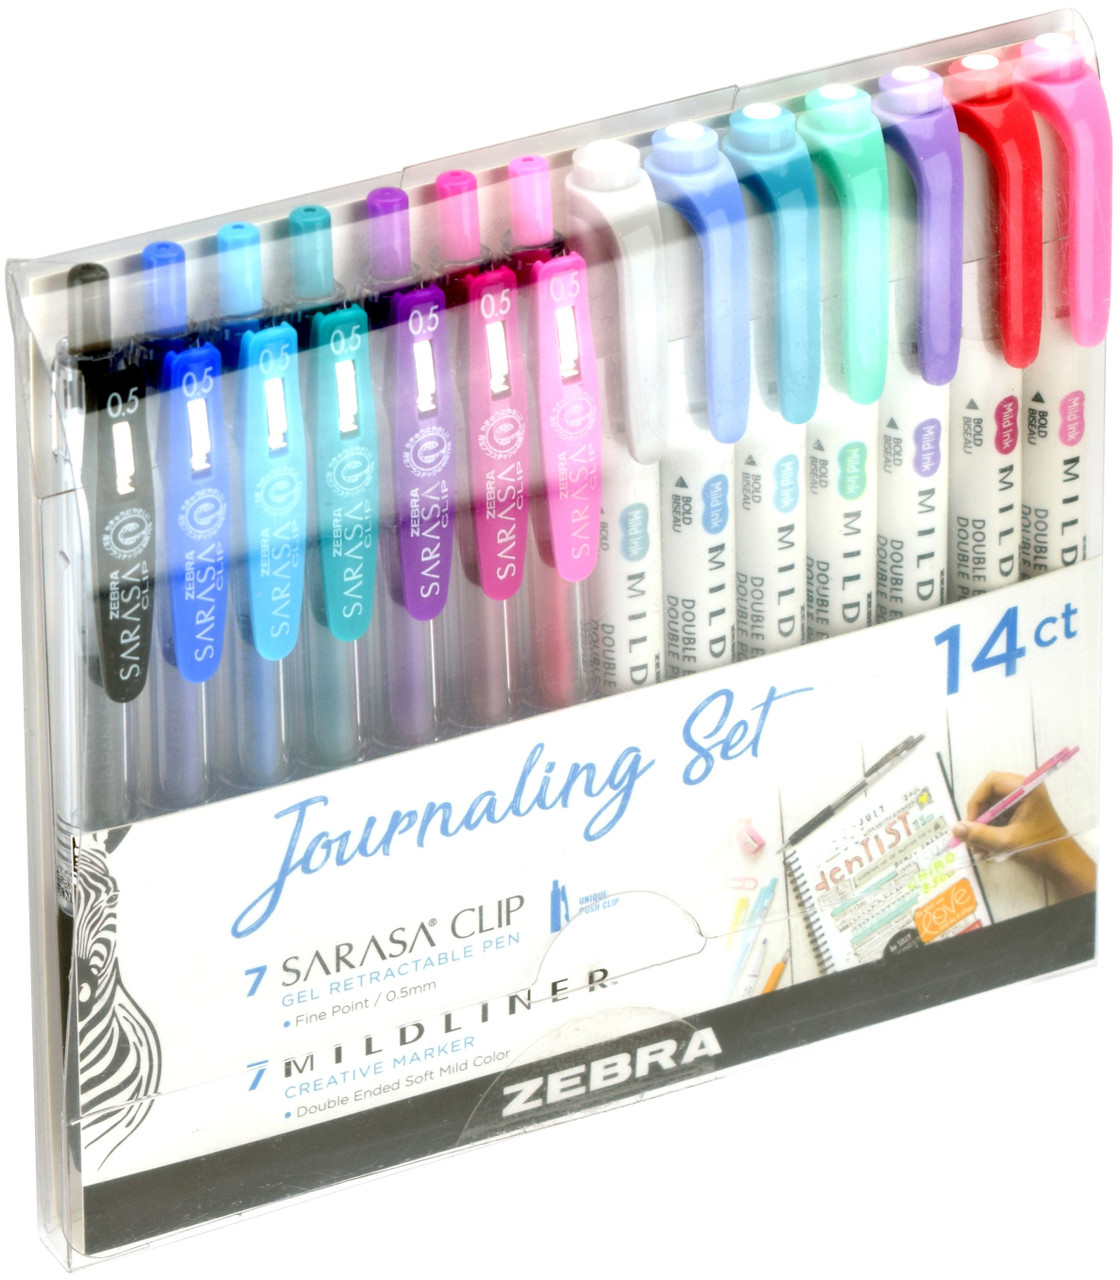 Zebra Journaling Gift Set